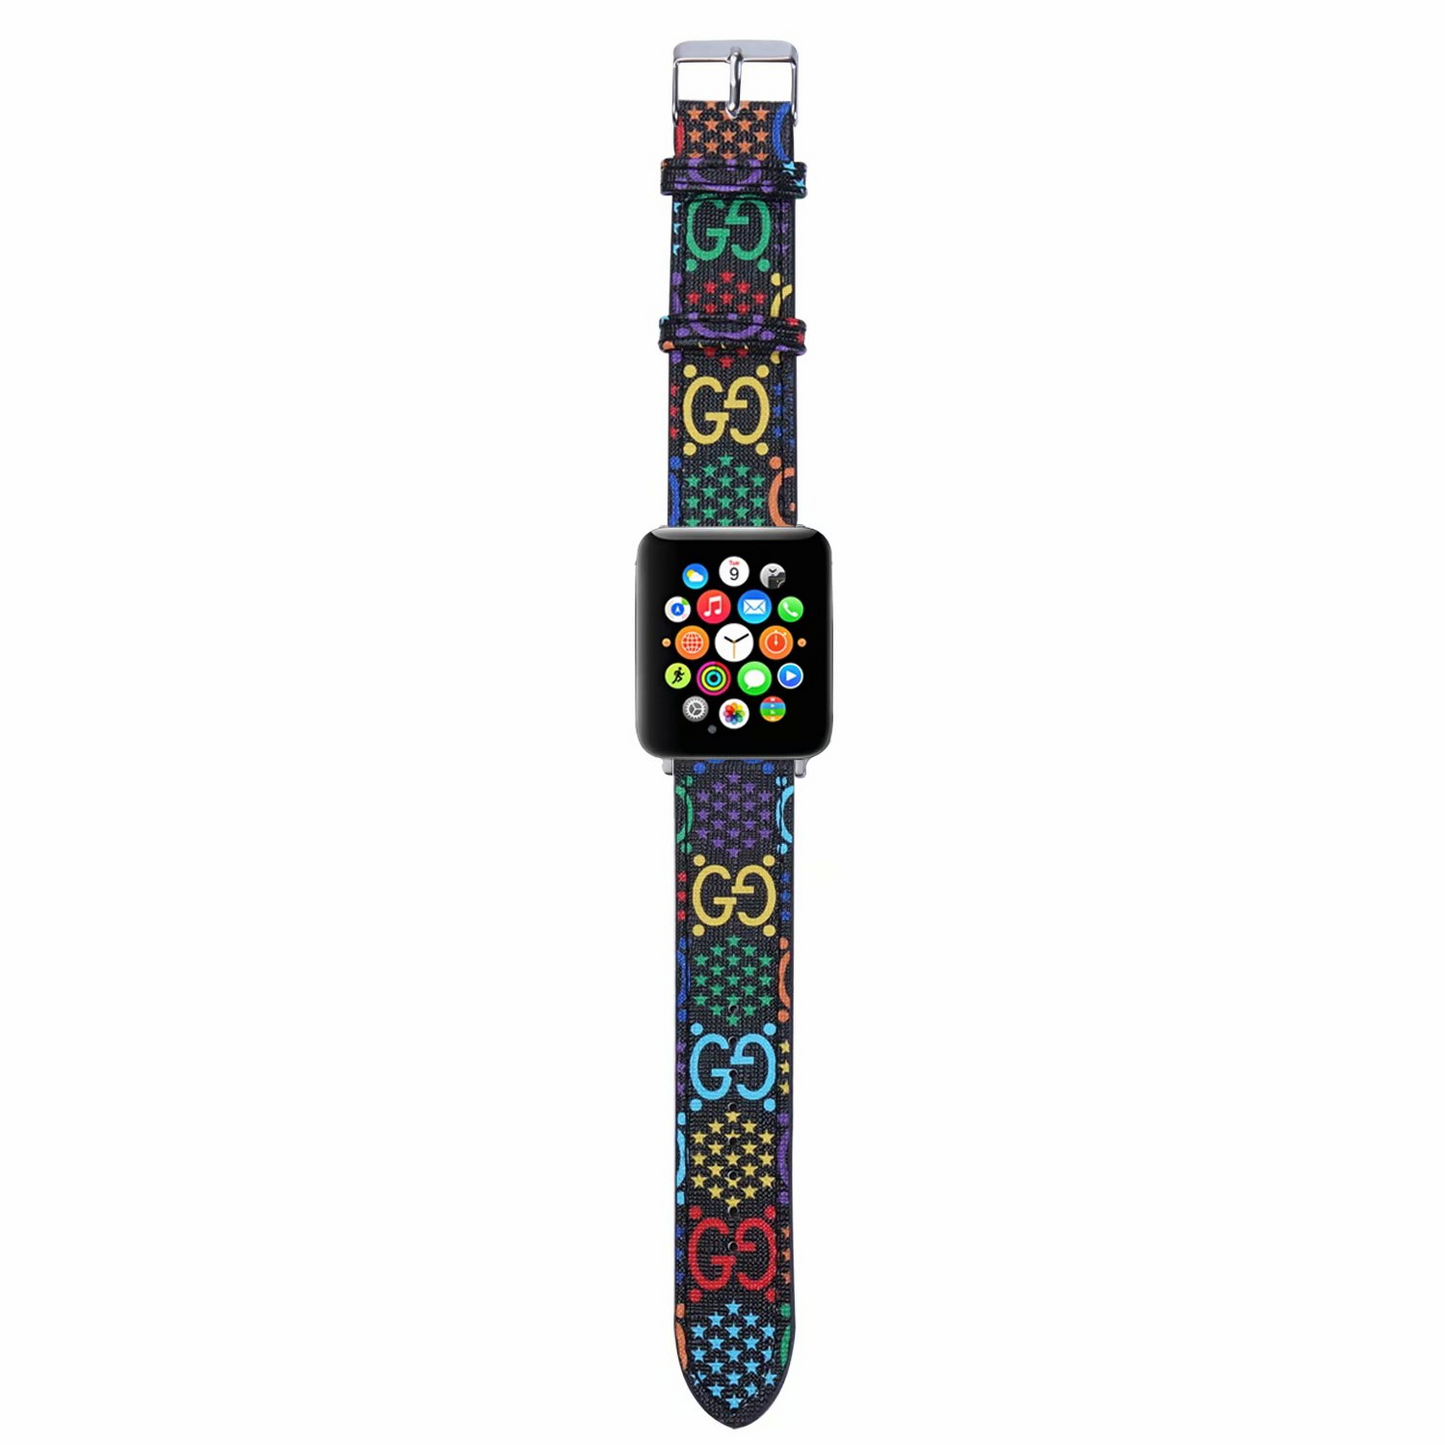 GG Rainbow Blackout Edition Apple Watch Band